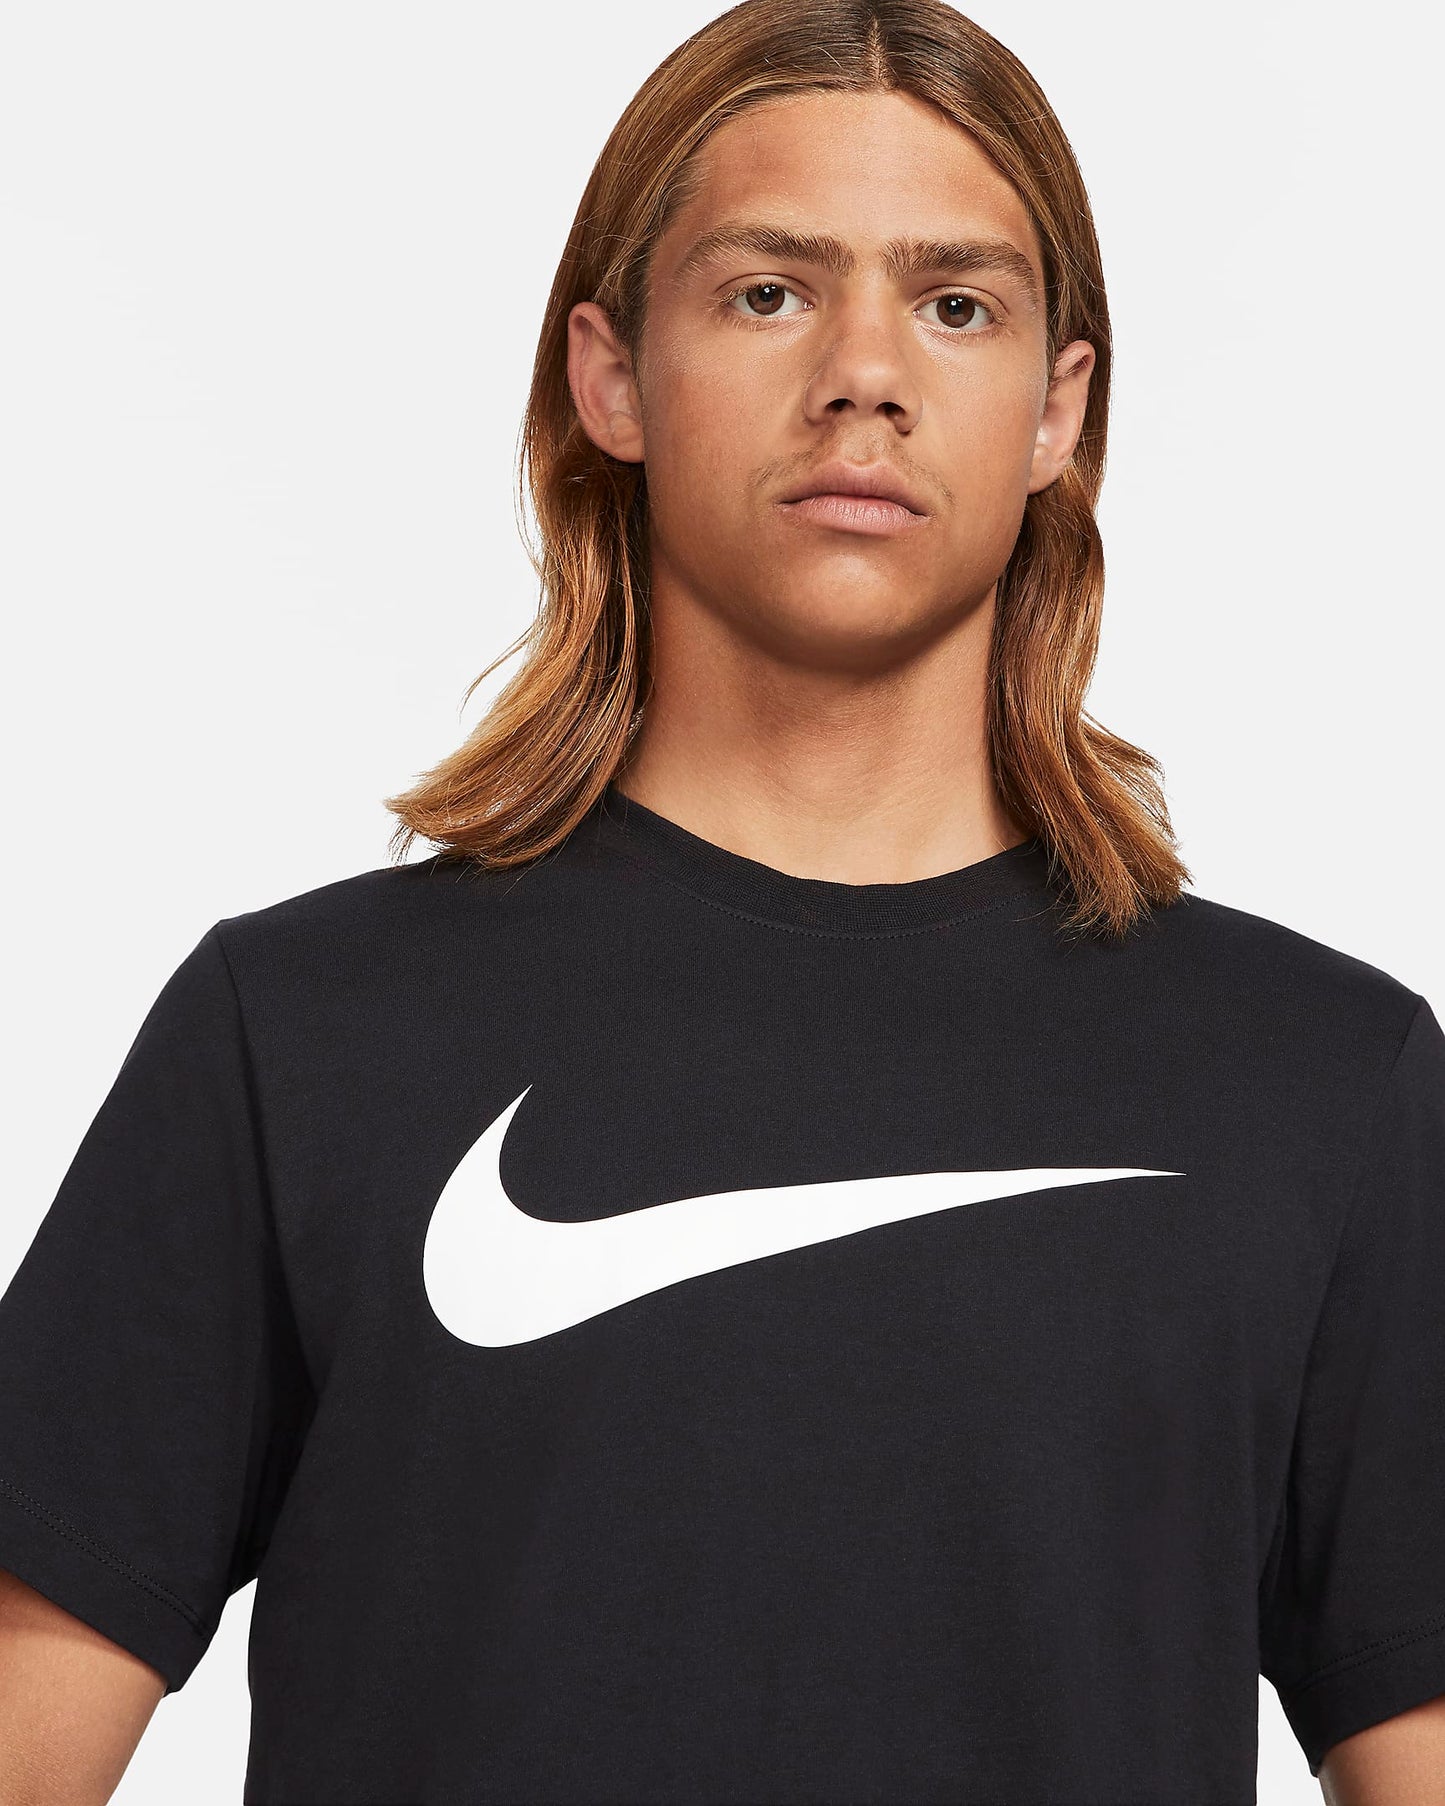 Nike Men's Sportswear Swoosh T-Shirt, Black/White